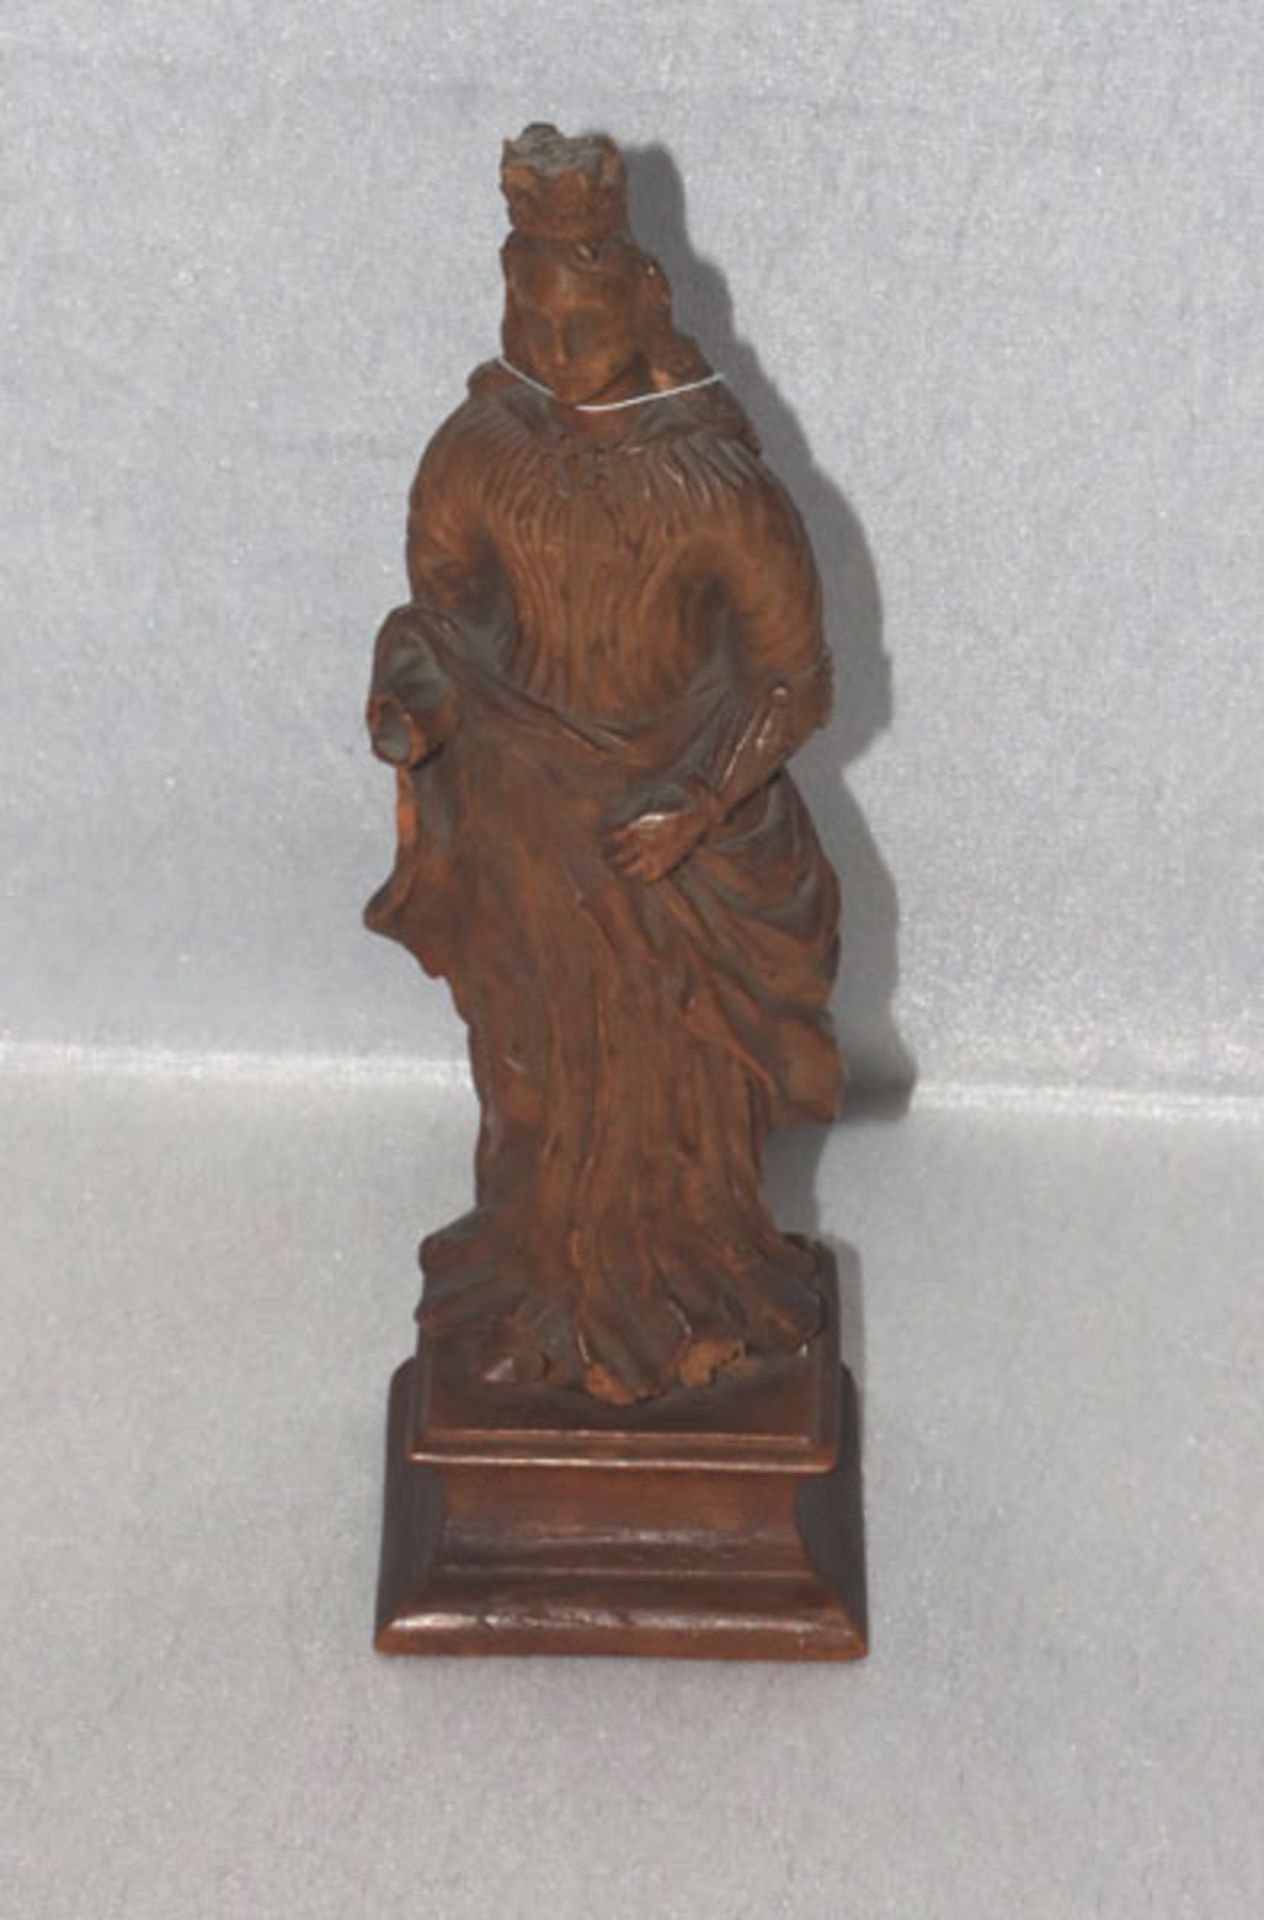 Holzfigur 'Mutter Gottes', 19. Jahrhundert, beschädigt, alter Wurmbefall, auf Sockel, H 25 cm,